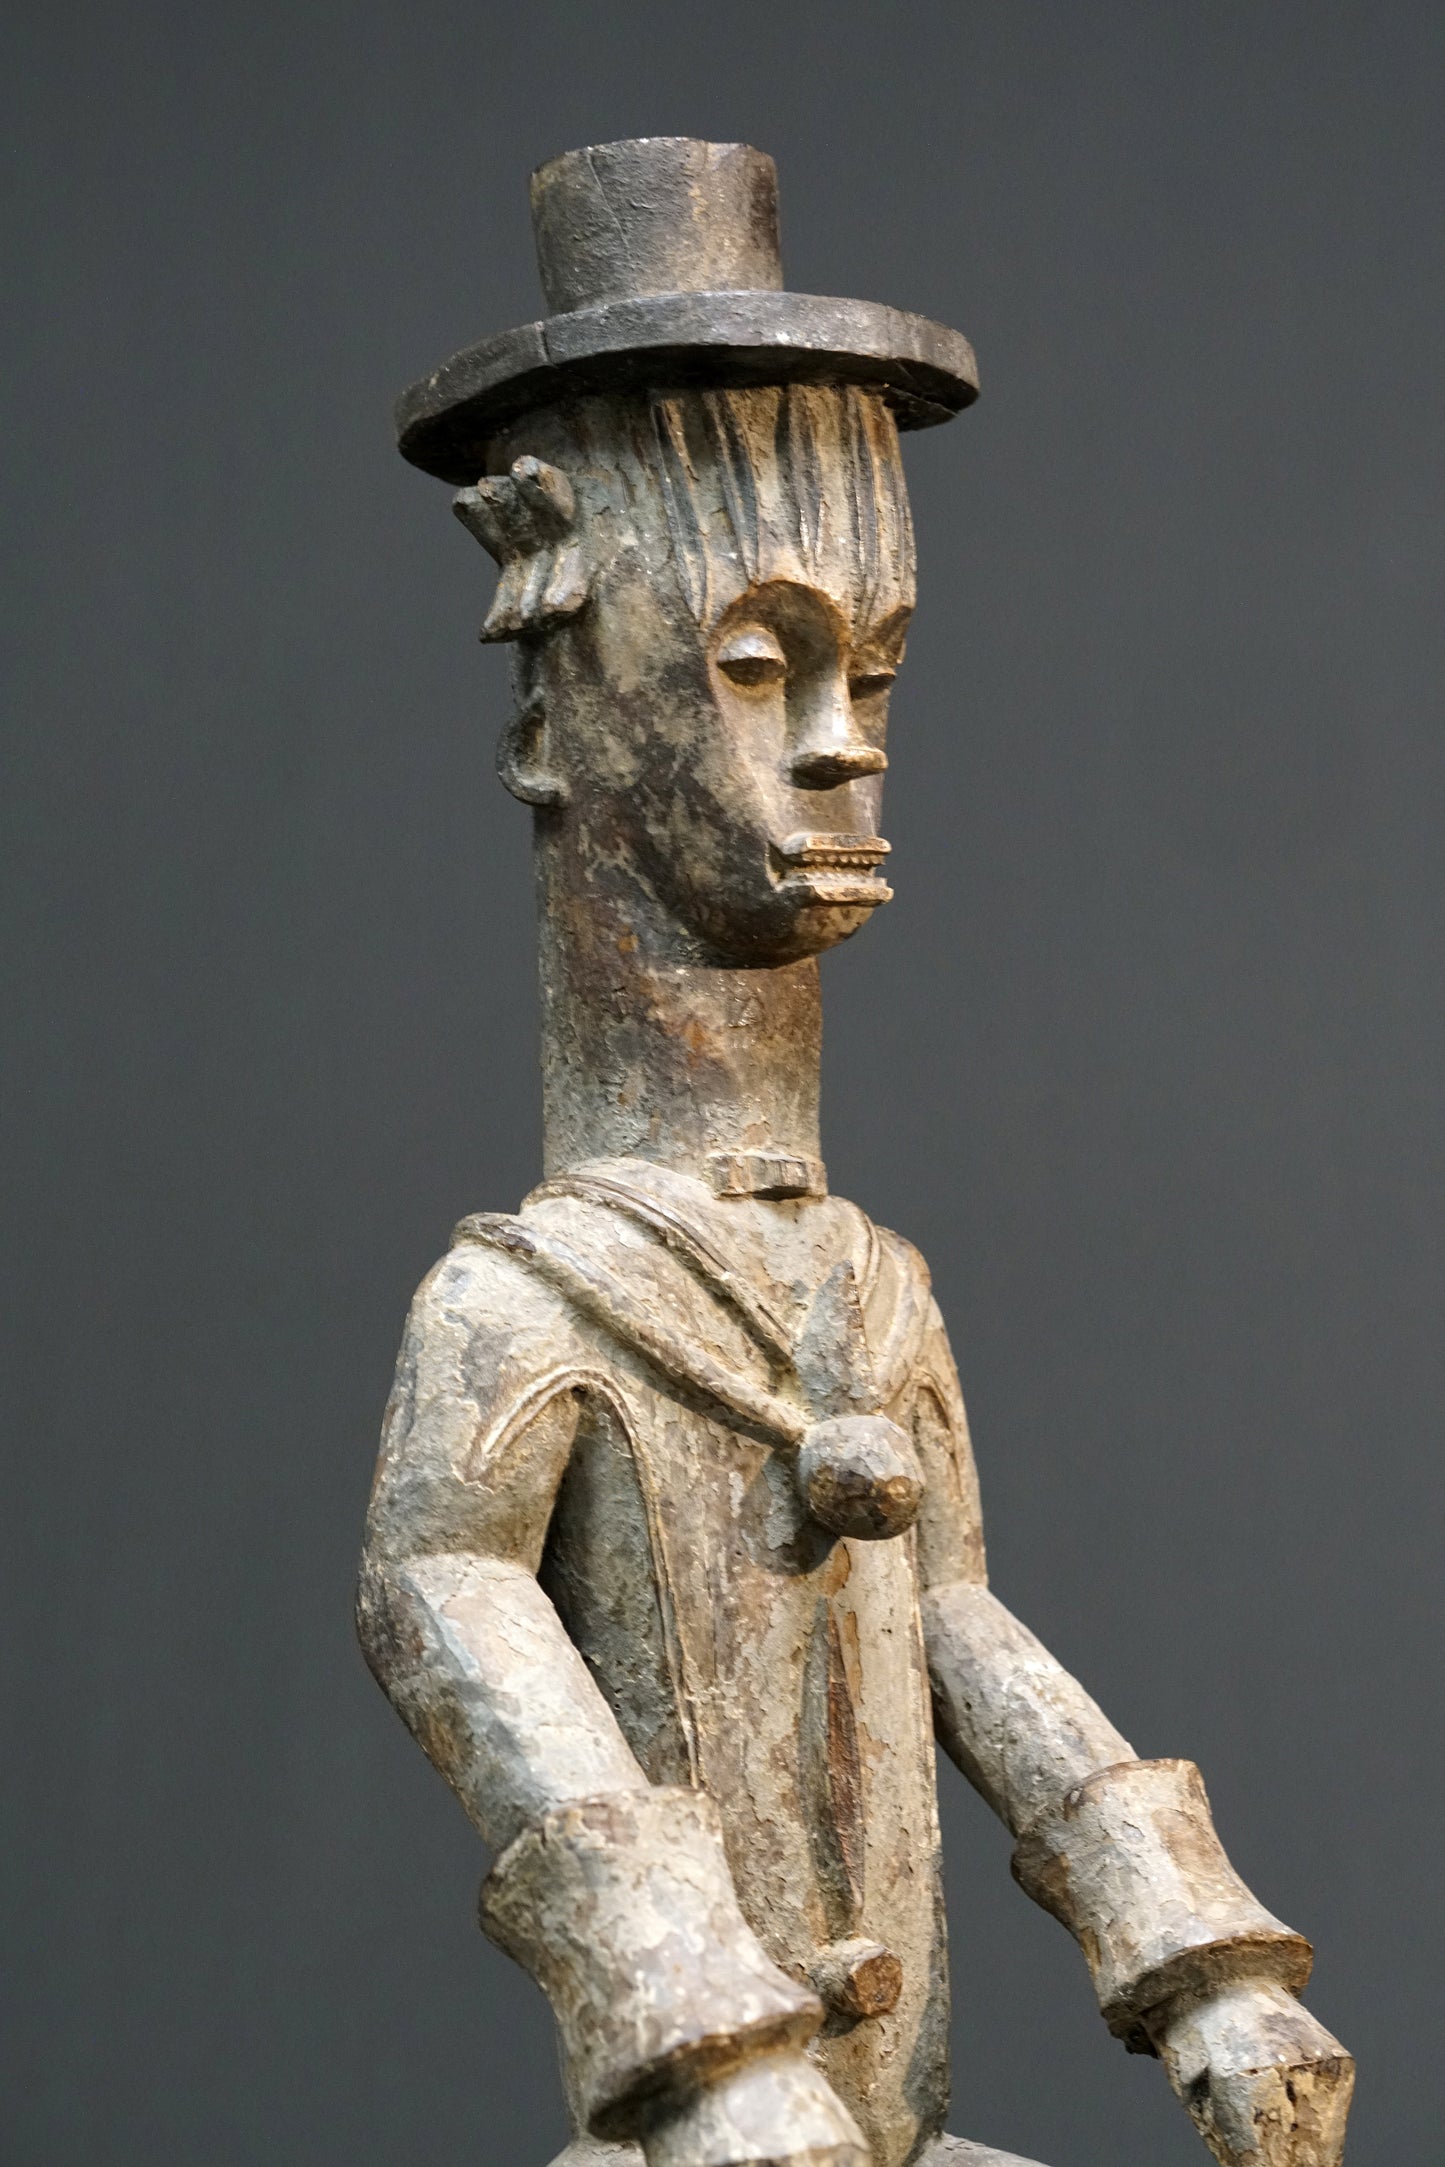 A male Urhobo statue